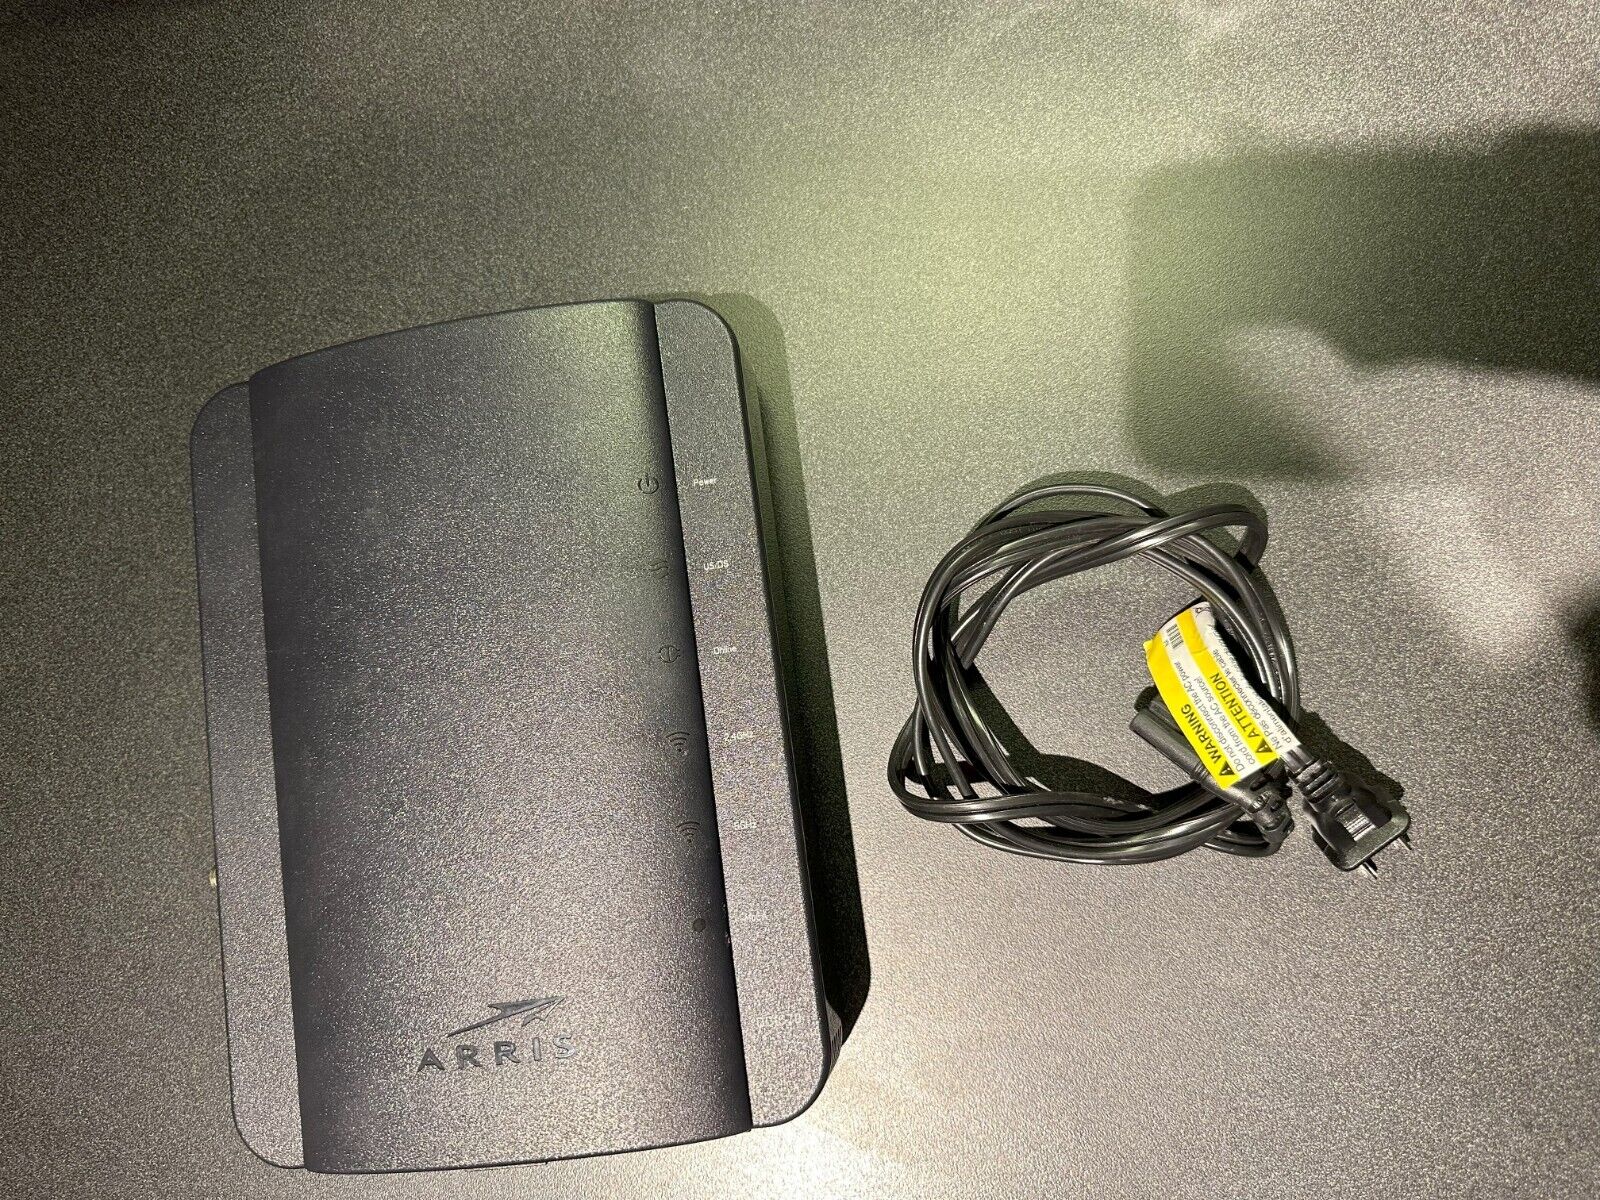 ARRIS DG1670A Dual Band Data Wireless Cable Modem Router 4-Port